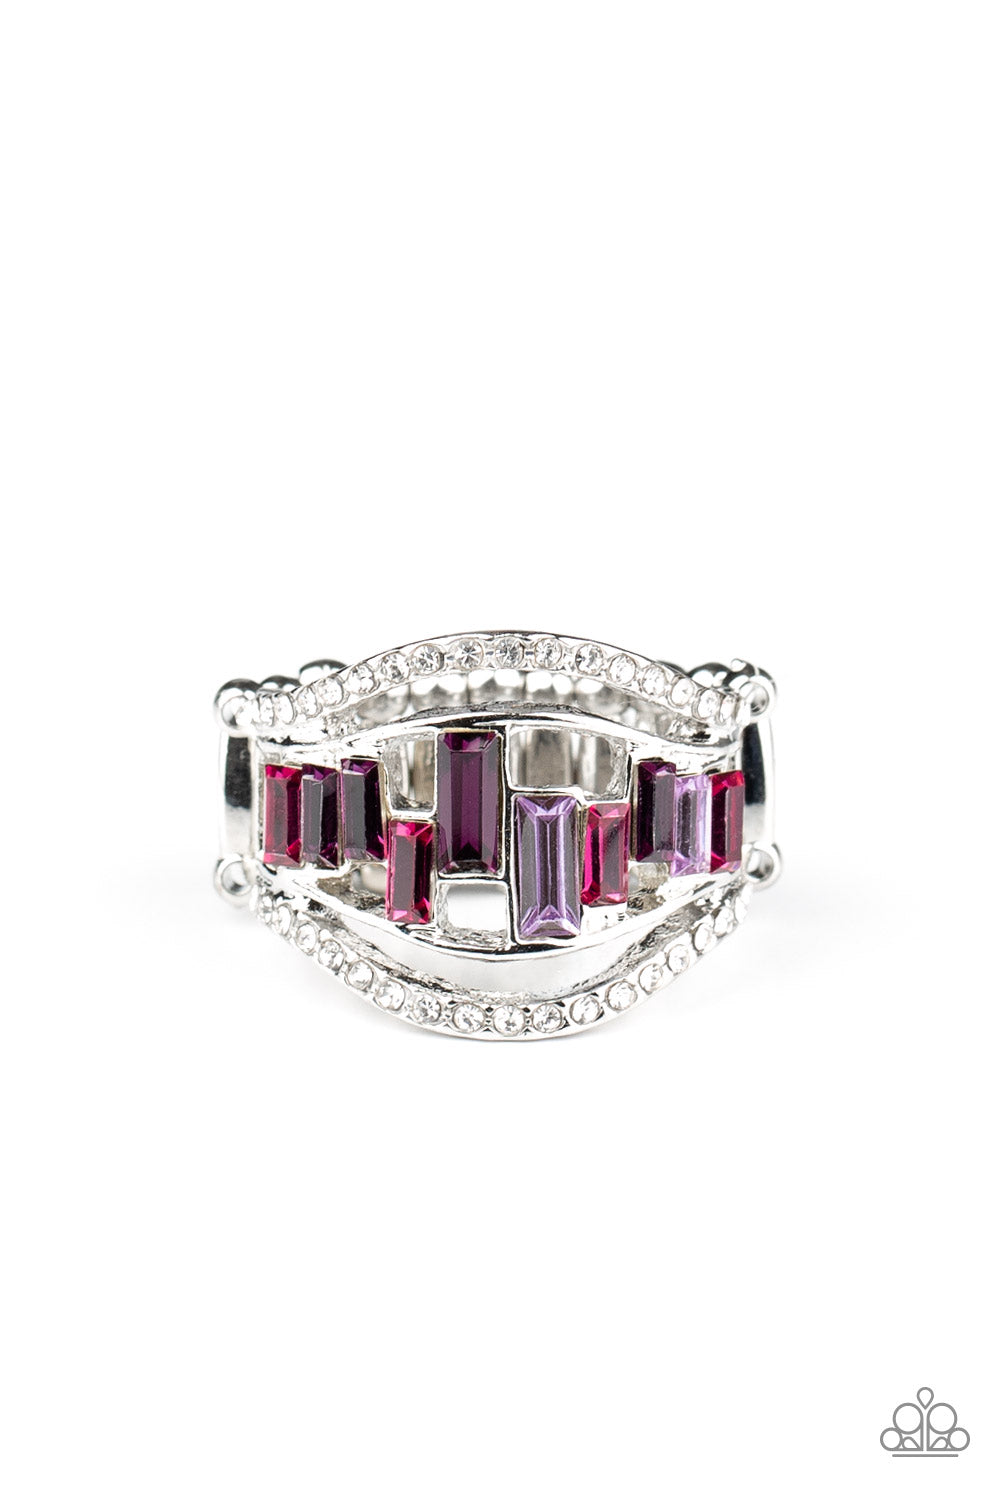 Treasure Chest Charm Purple Ring